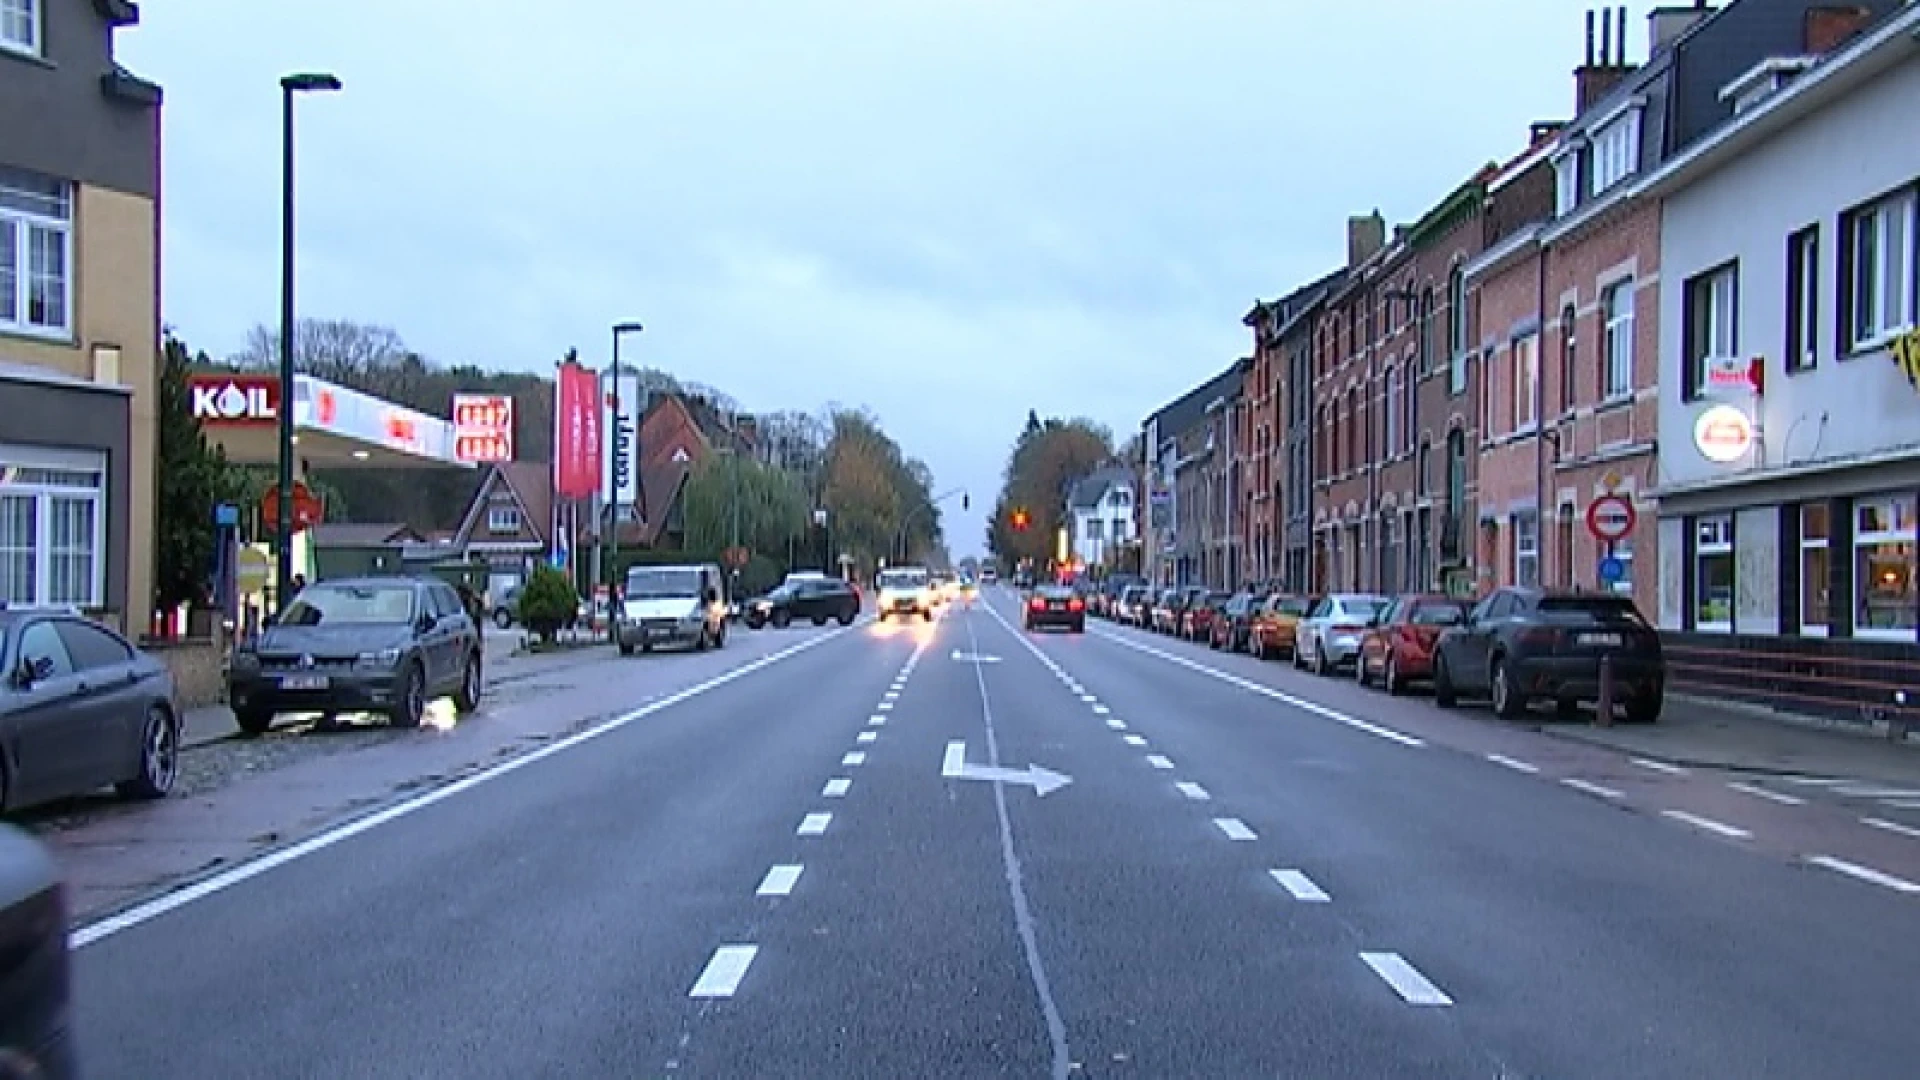 Leuven installeert 18 ANPR-camera's langs grote invalswegen: "We willen dievenbendes sneller pakken"